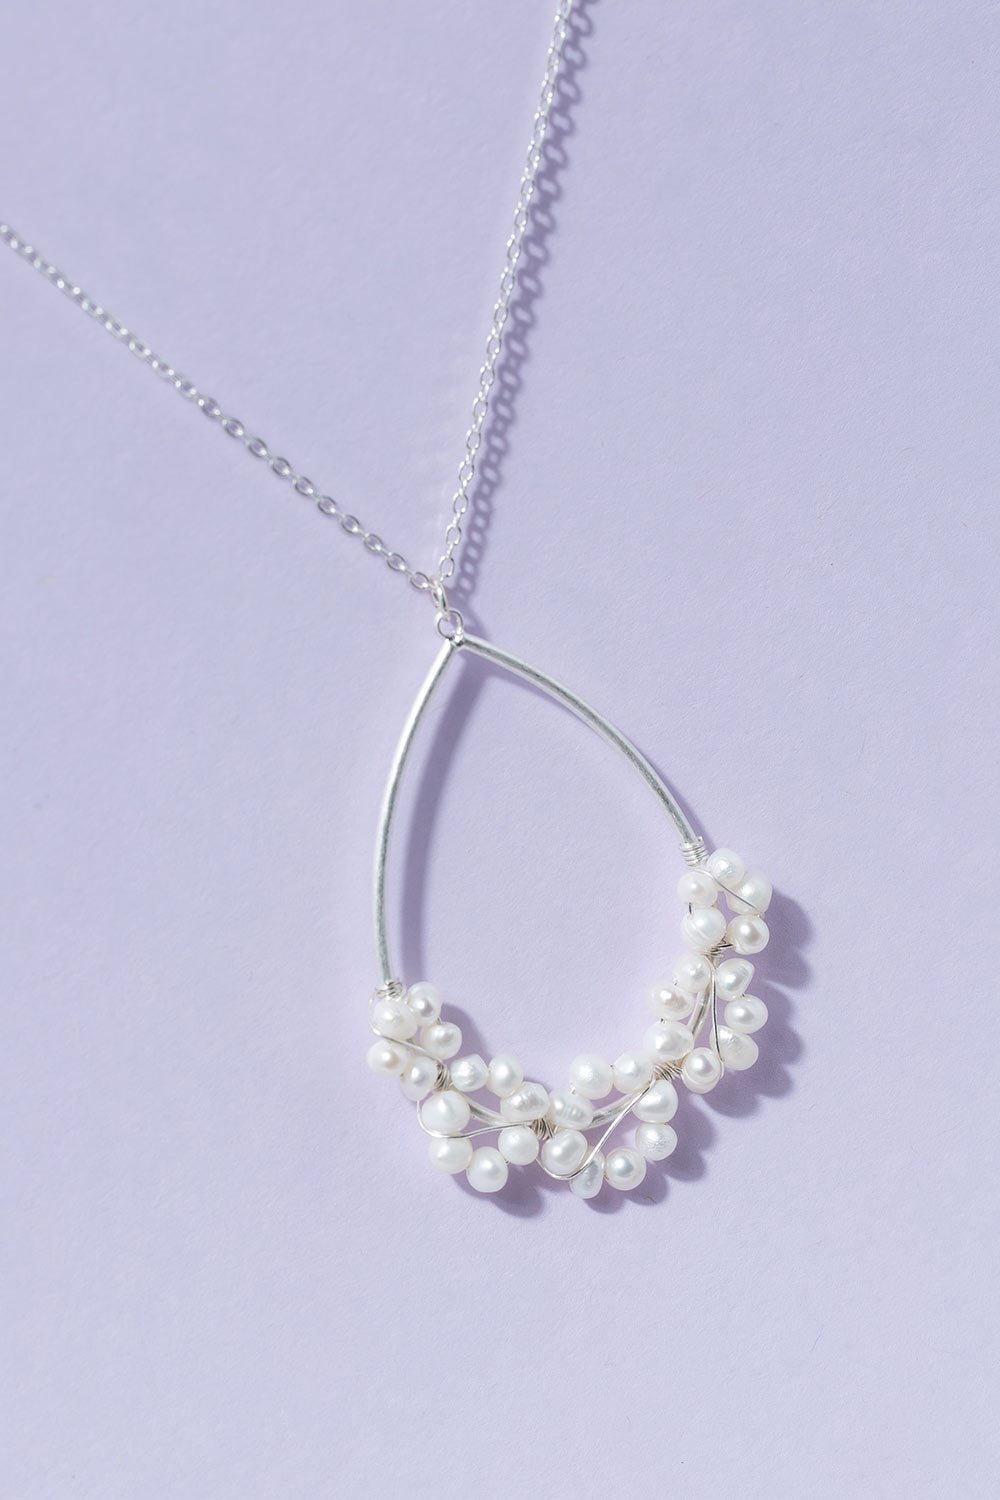 Type 2 Snow Drop Necklace